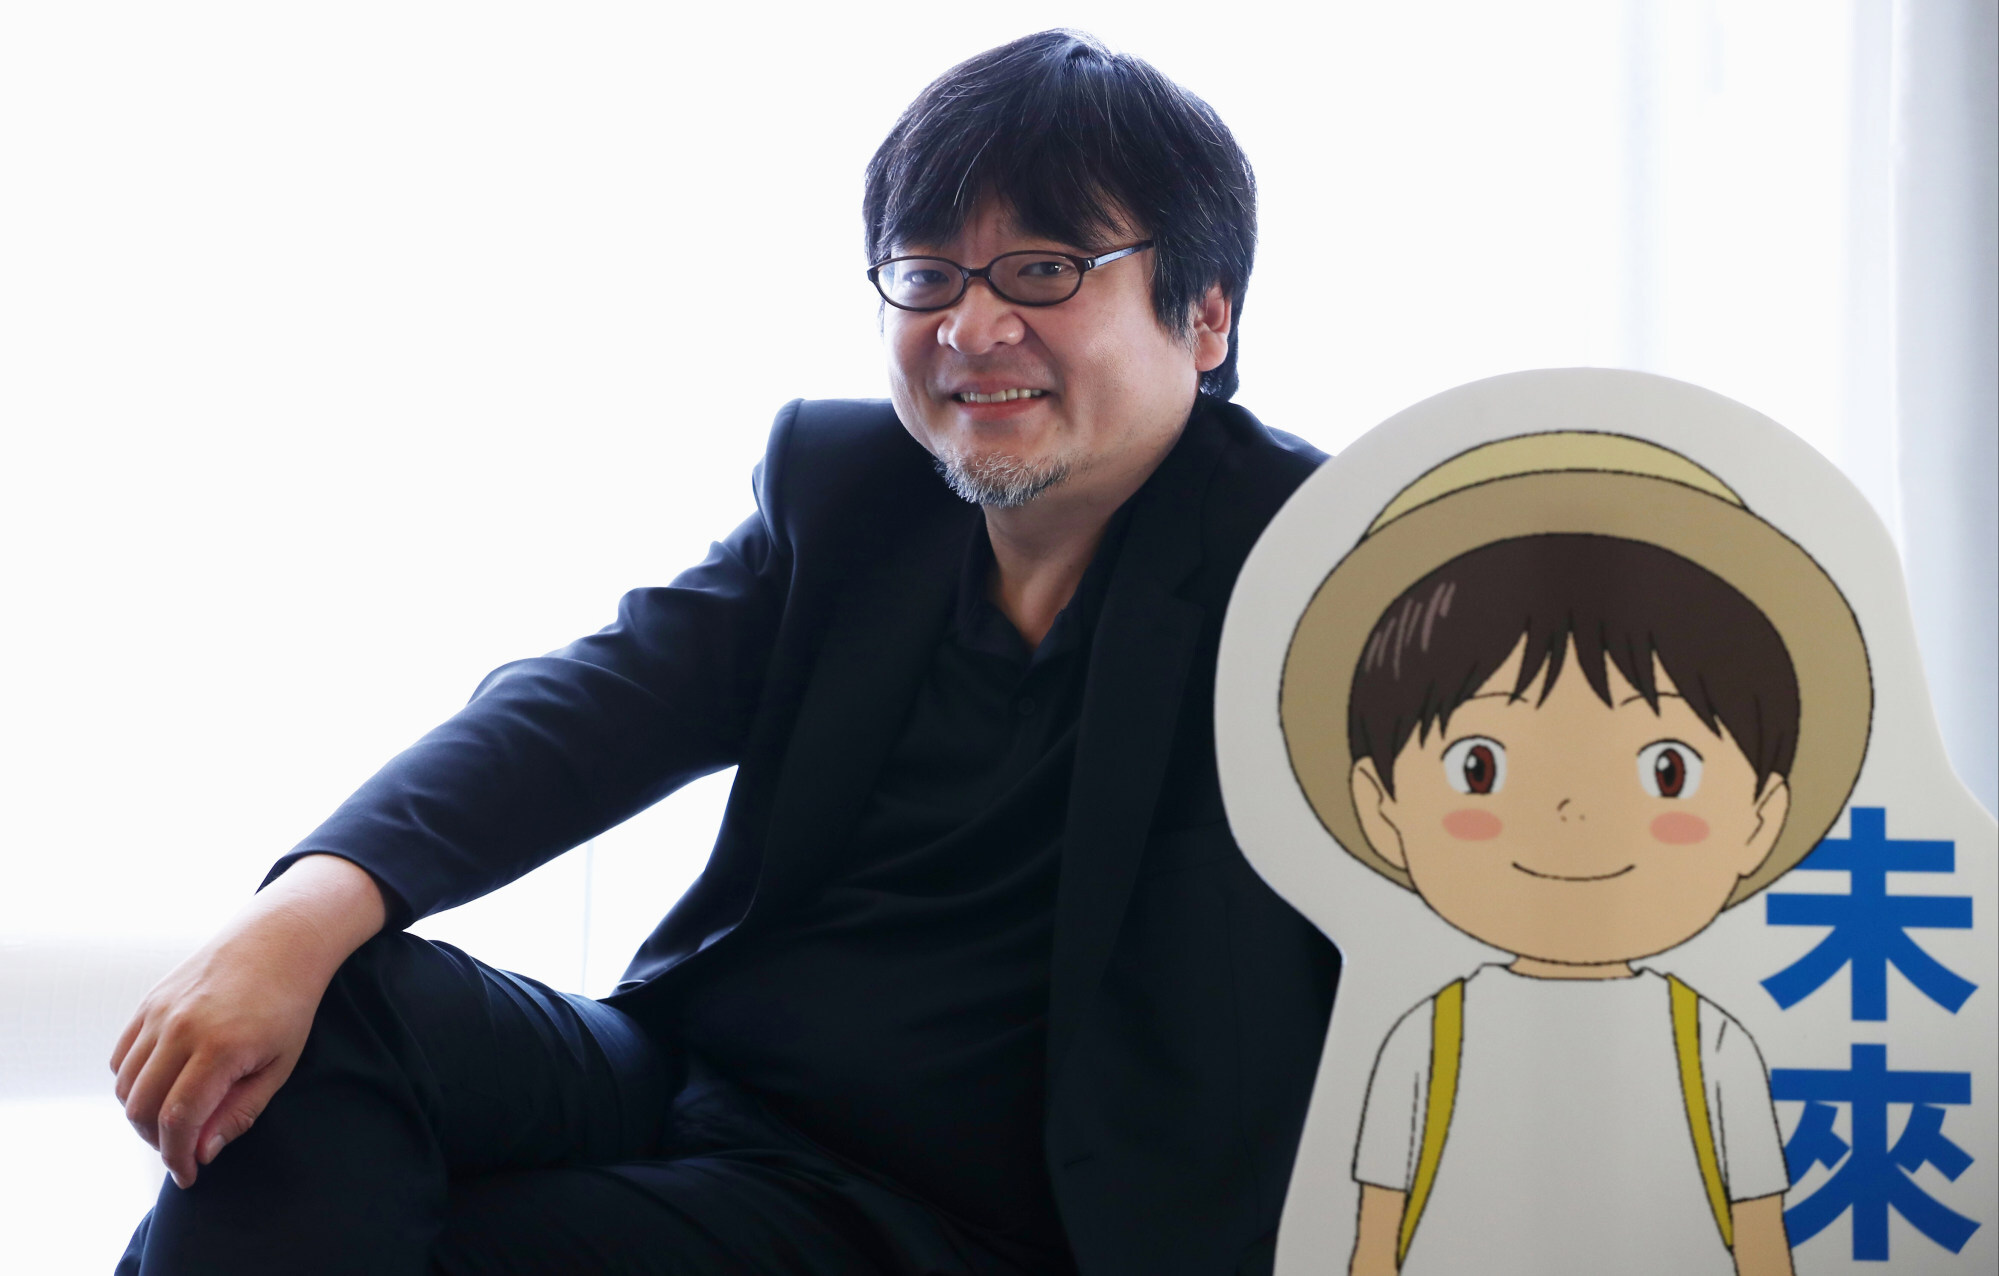 Belle' creator Mamoru Hosoda on global collaboration, Japanese